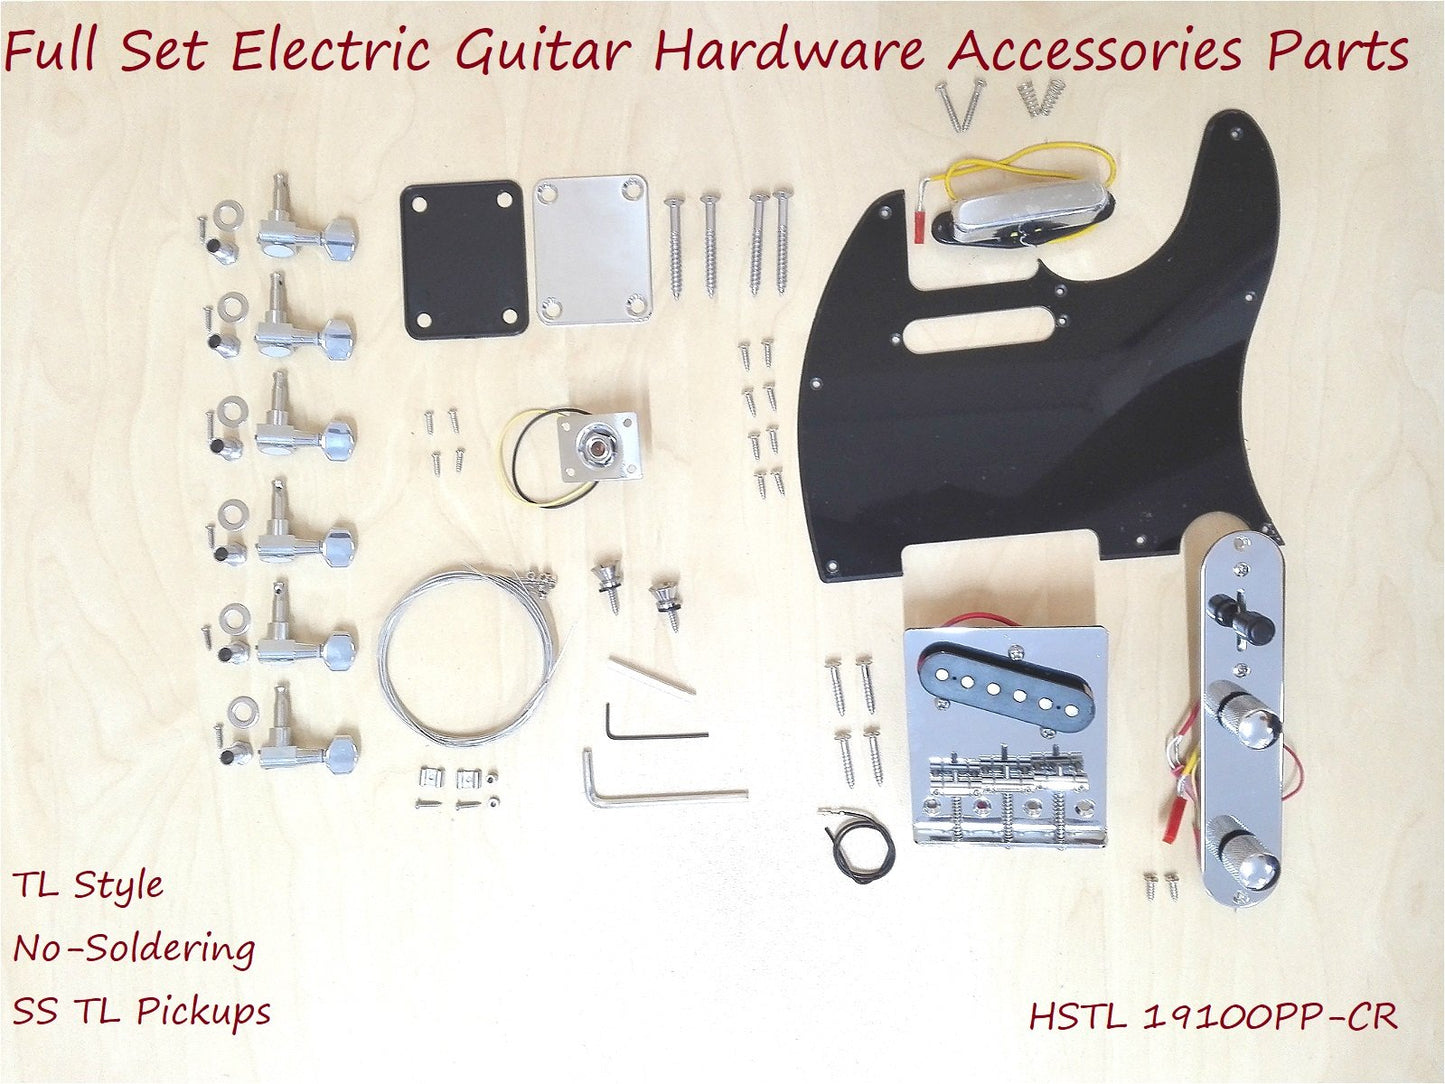 Full Set Electric Guitar Hardware Accessories Parts, No-Soldering HSTL19100PPCRNS